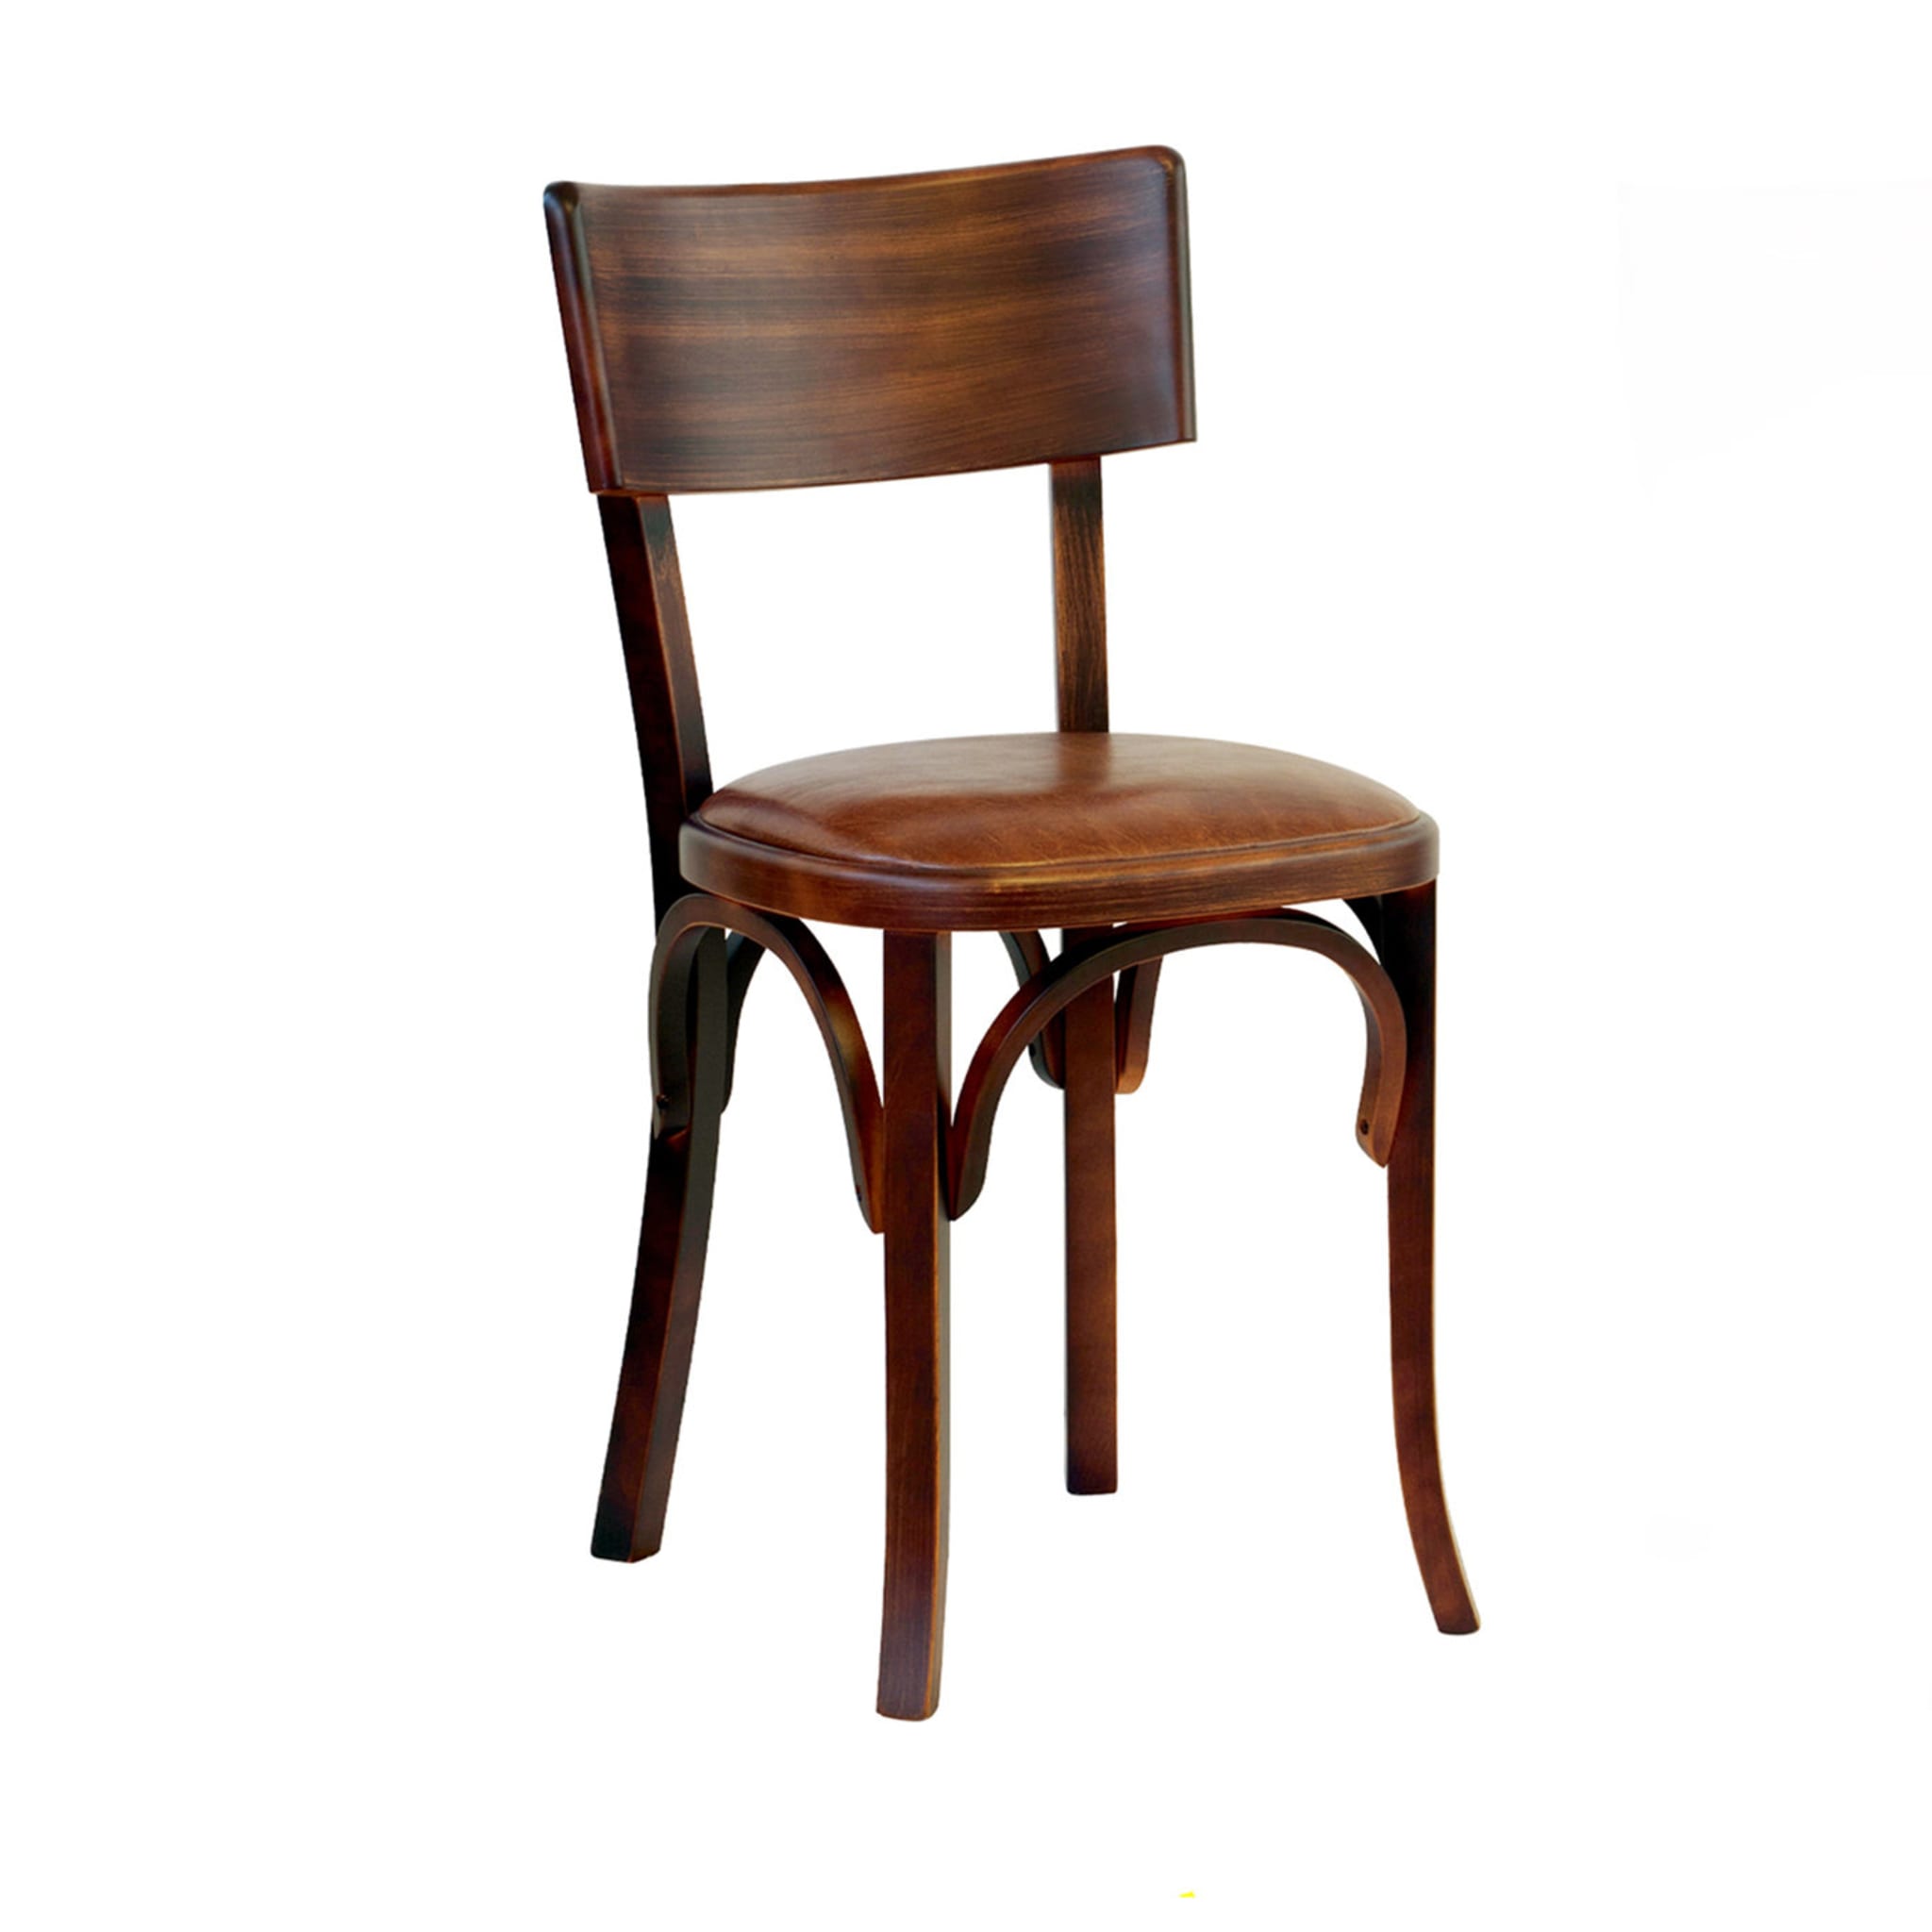 Grado Set of 2 Chairs - Main view